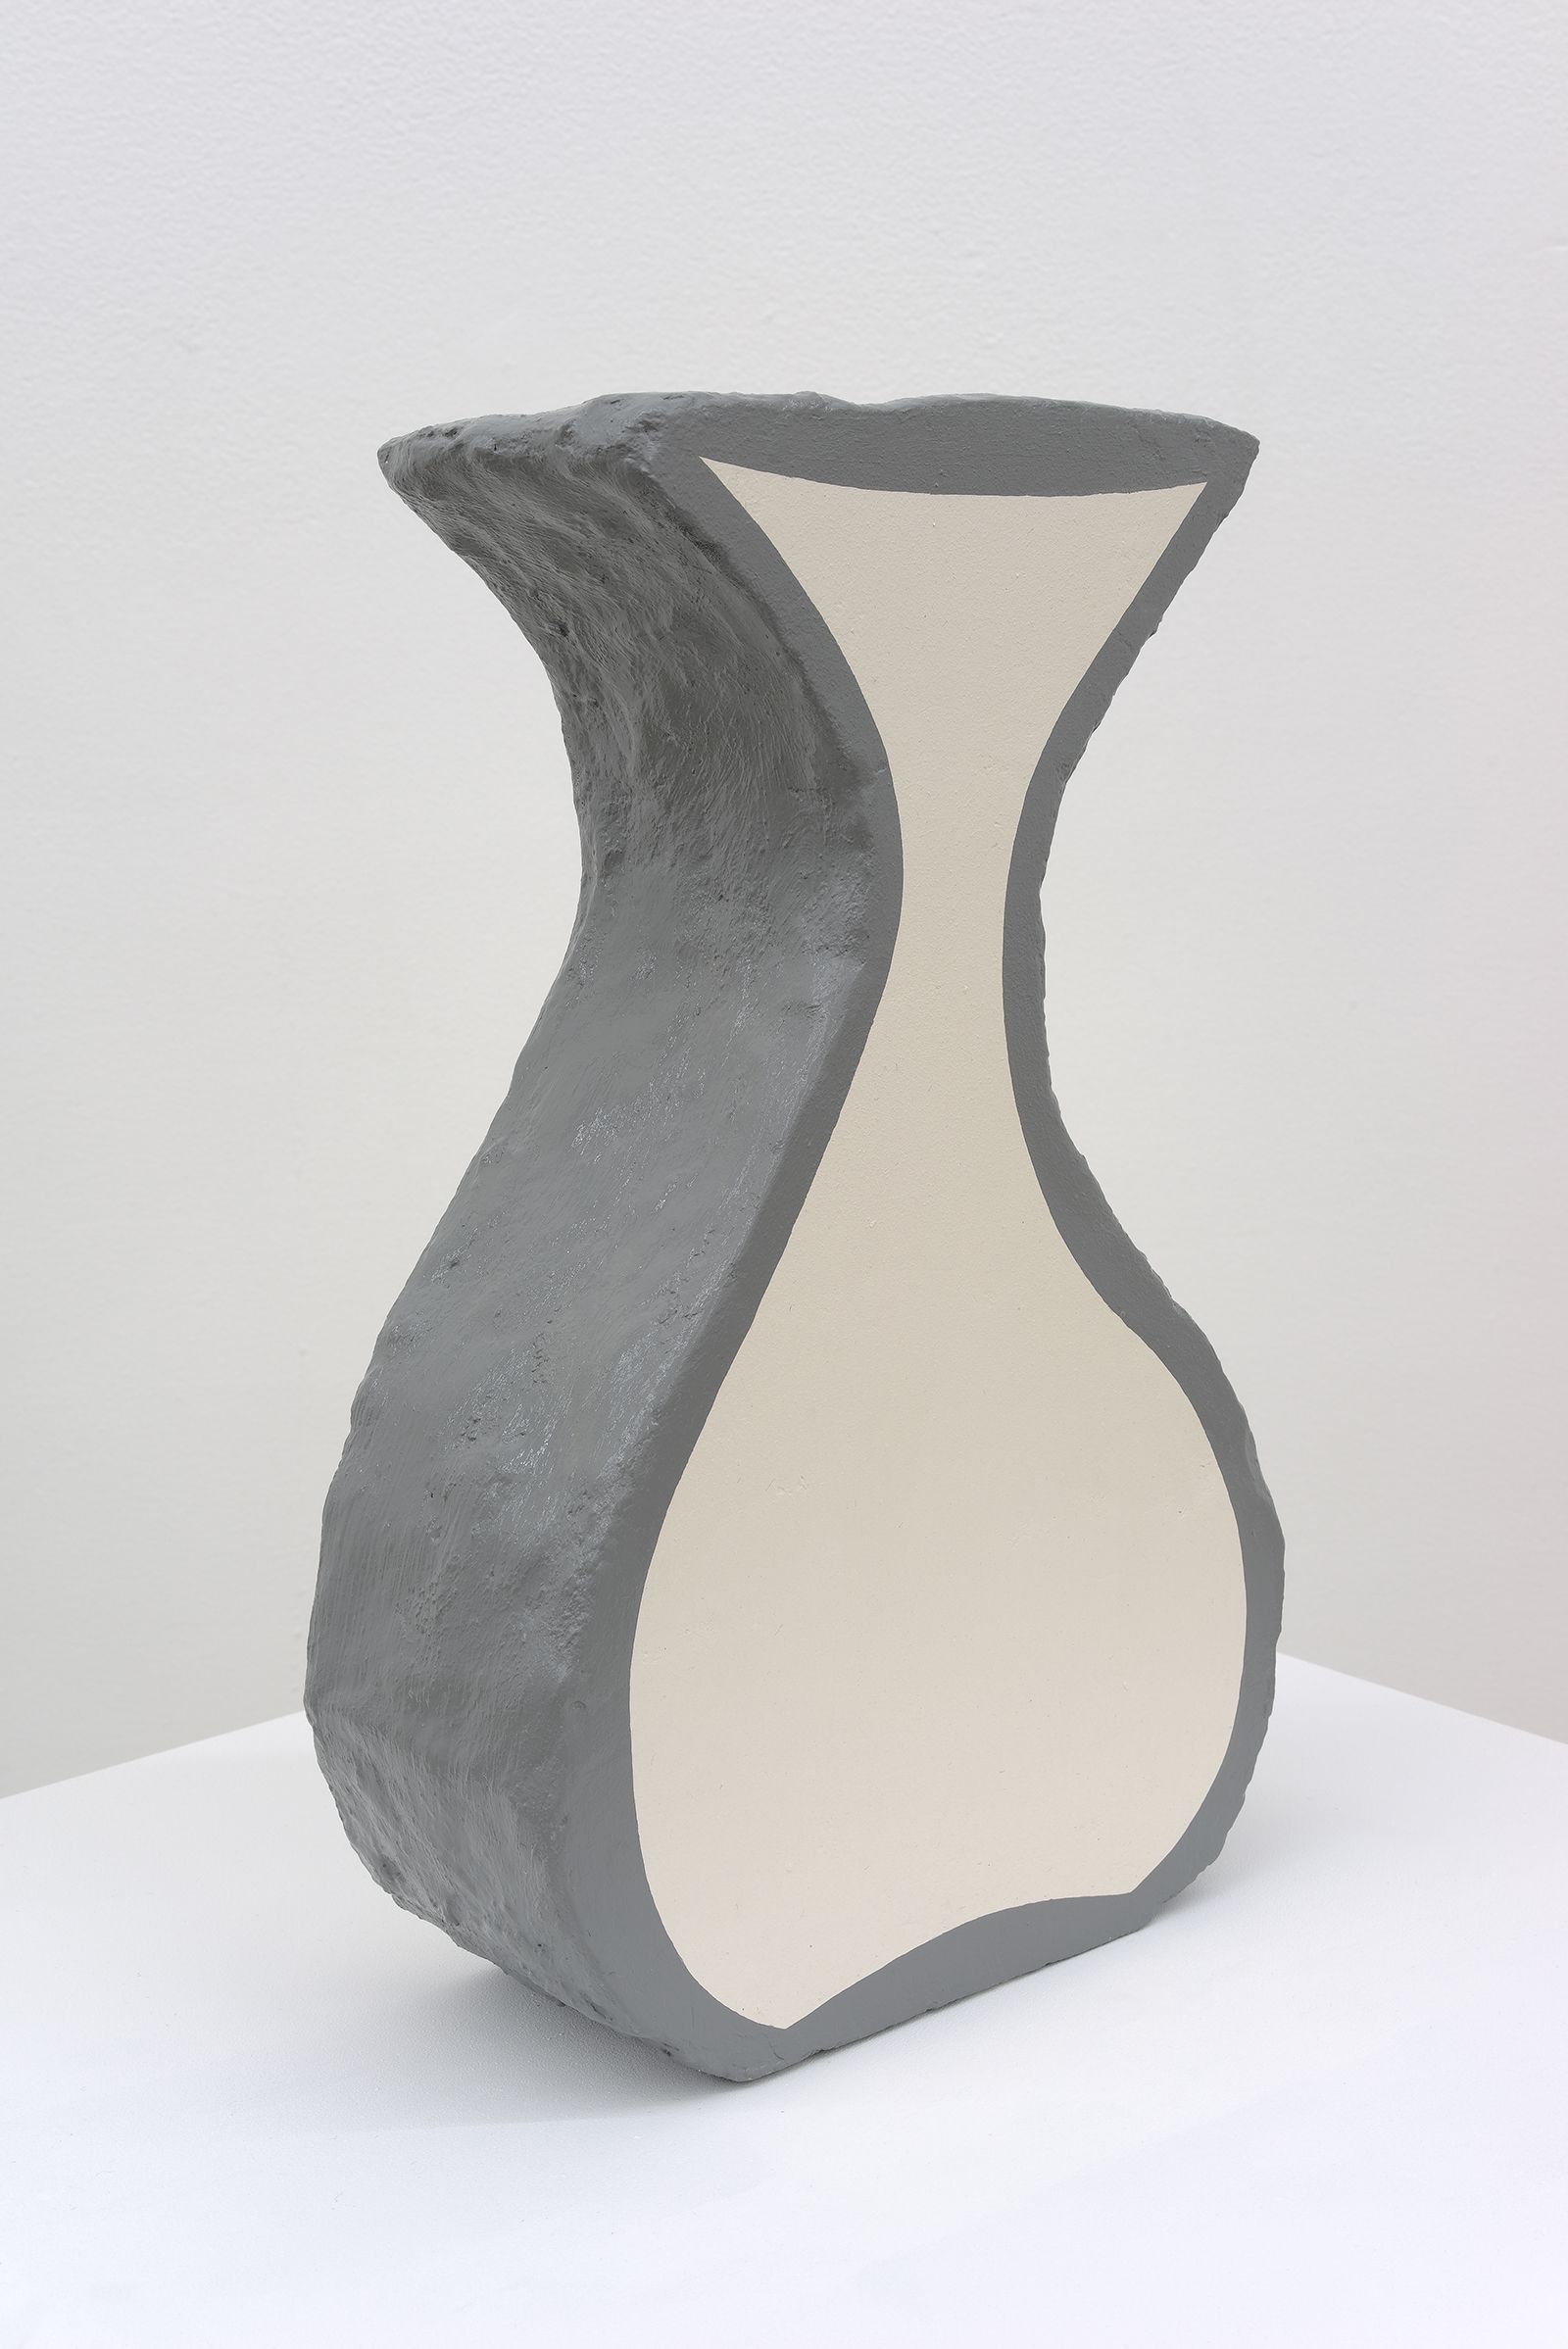 Denise Kupferschmidt, Vase, 2015, cement and acrylic, 14 x 8 3/4 x 3 1/2 in.